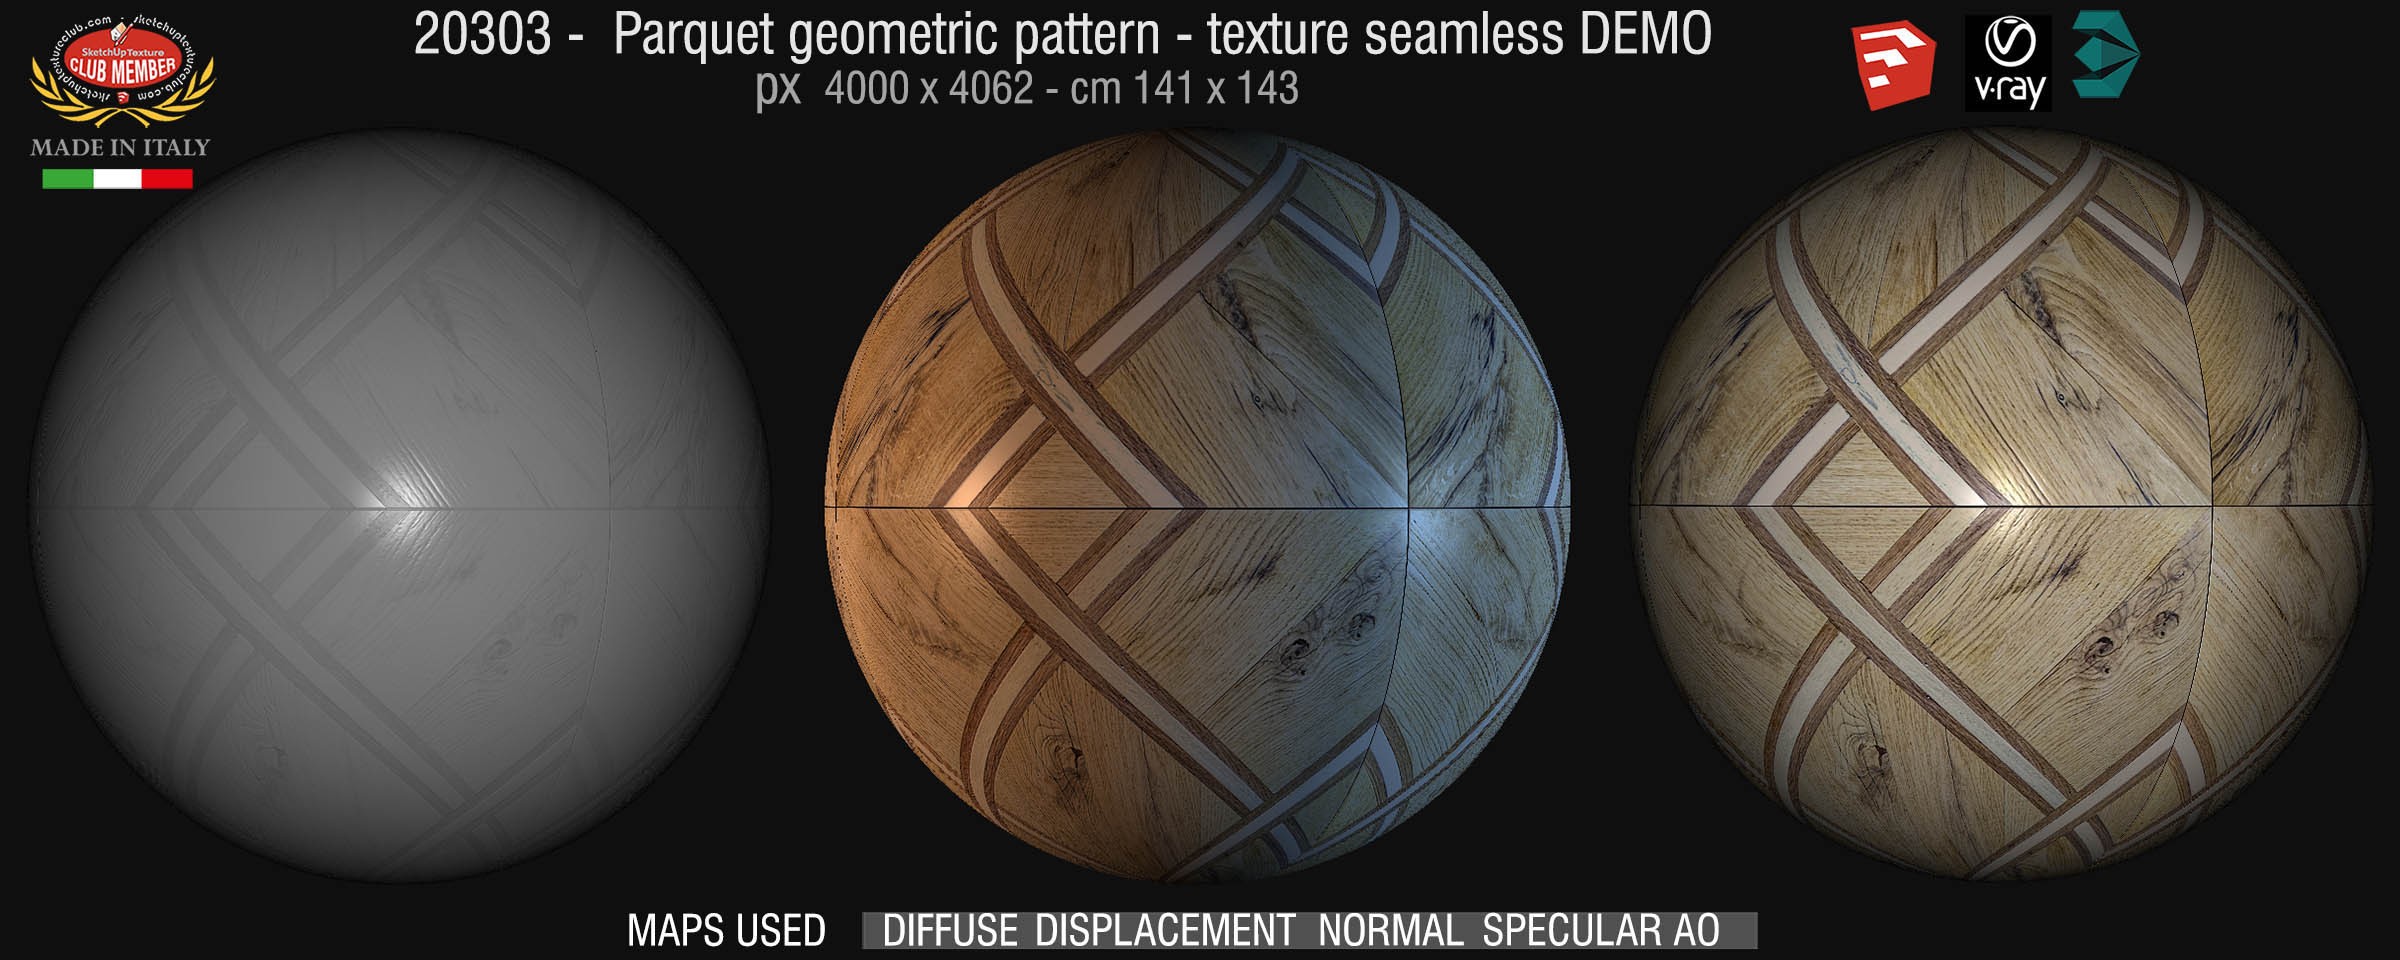 20303 Parquet geometric pattern texture seamless + maps DEMO